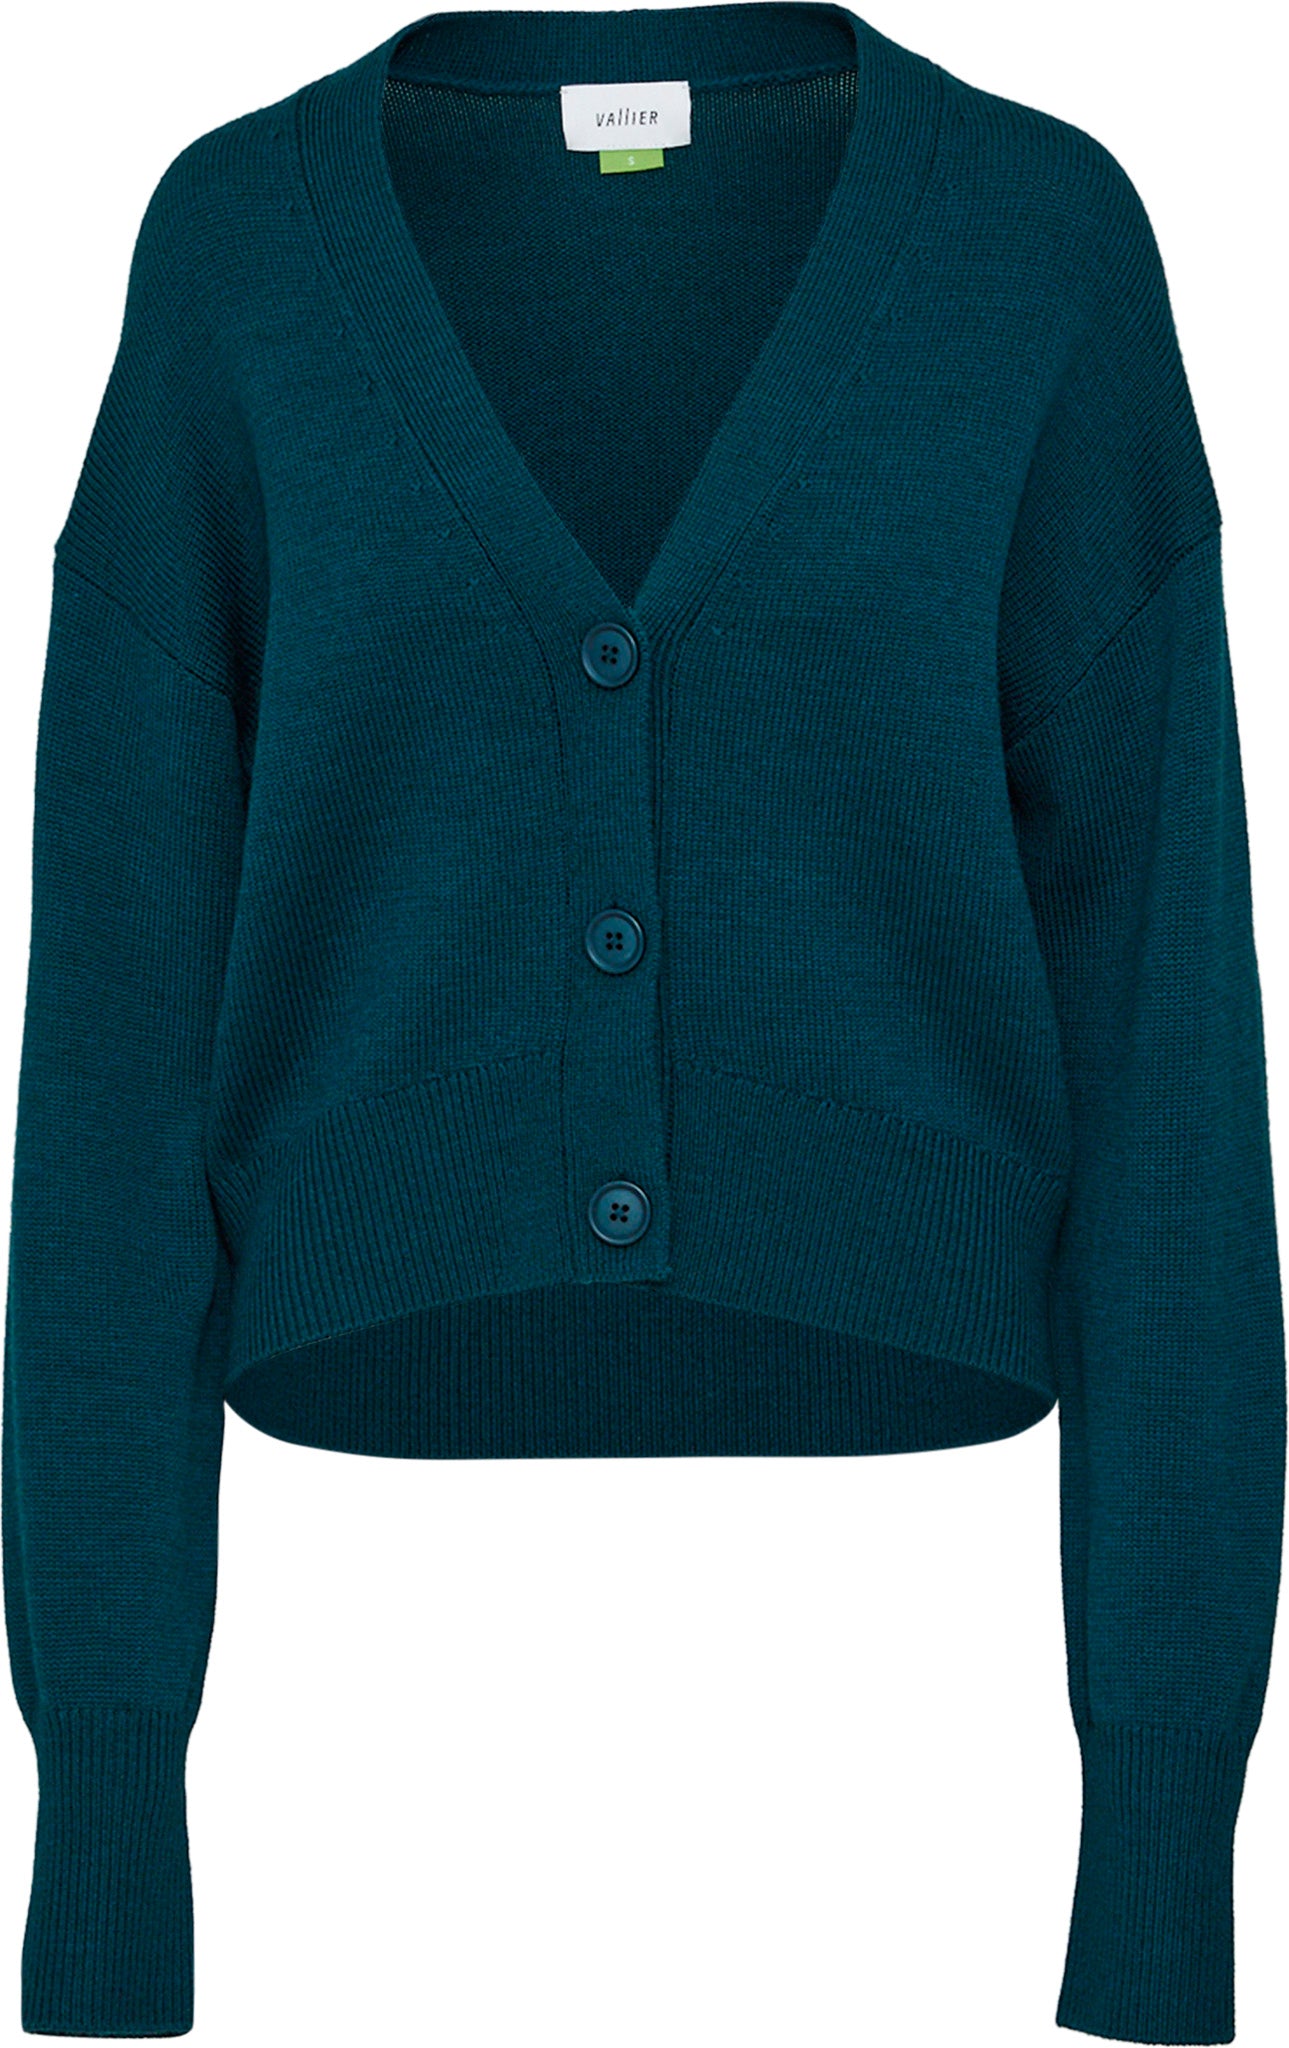 Super Soft Merino Wool Ladies M/C Raglan Sweater, SAOL